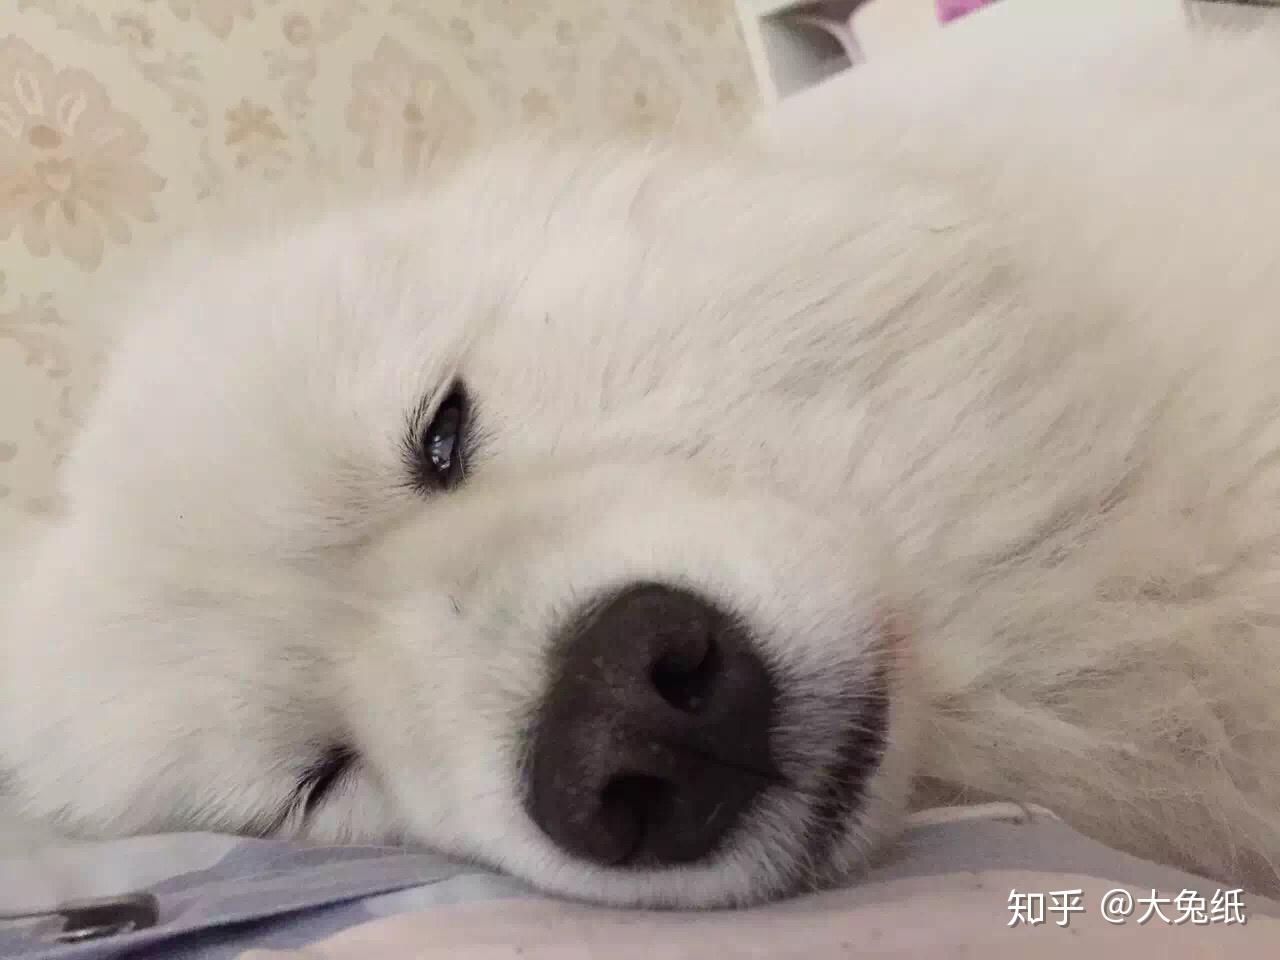 Sleepy Pup - Domestic Animals Wallpaper (2973993) - Fanpop